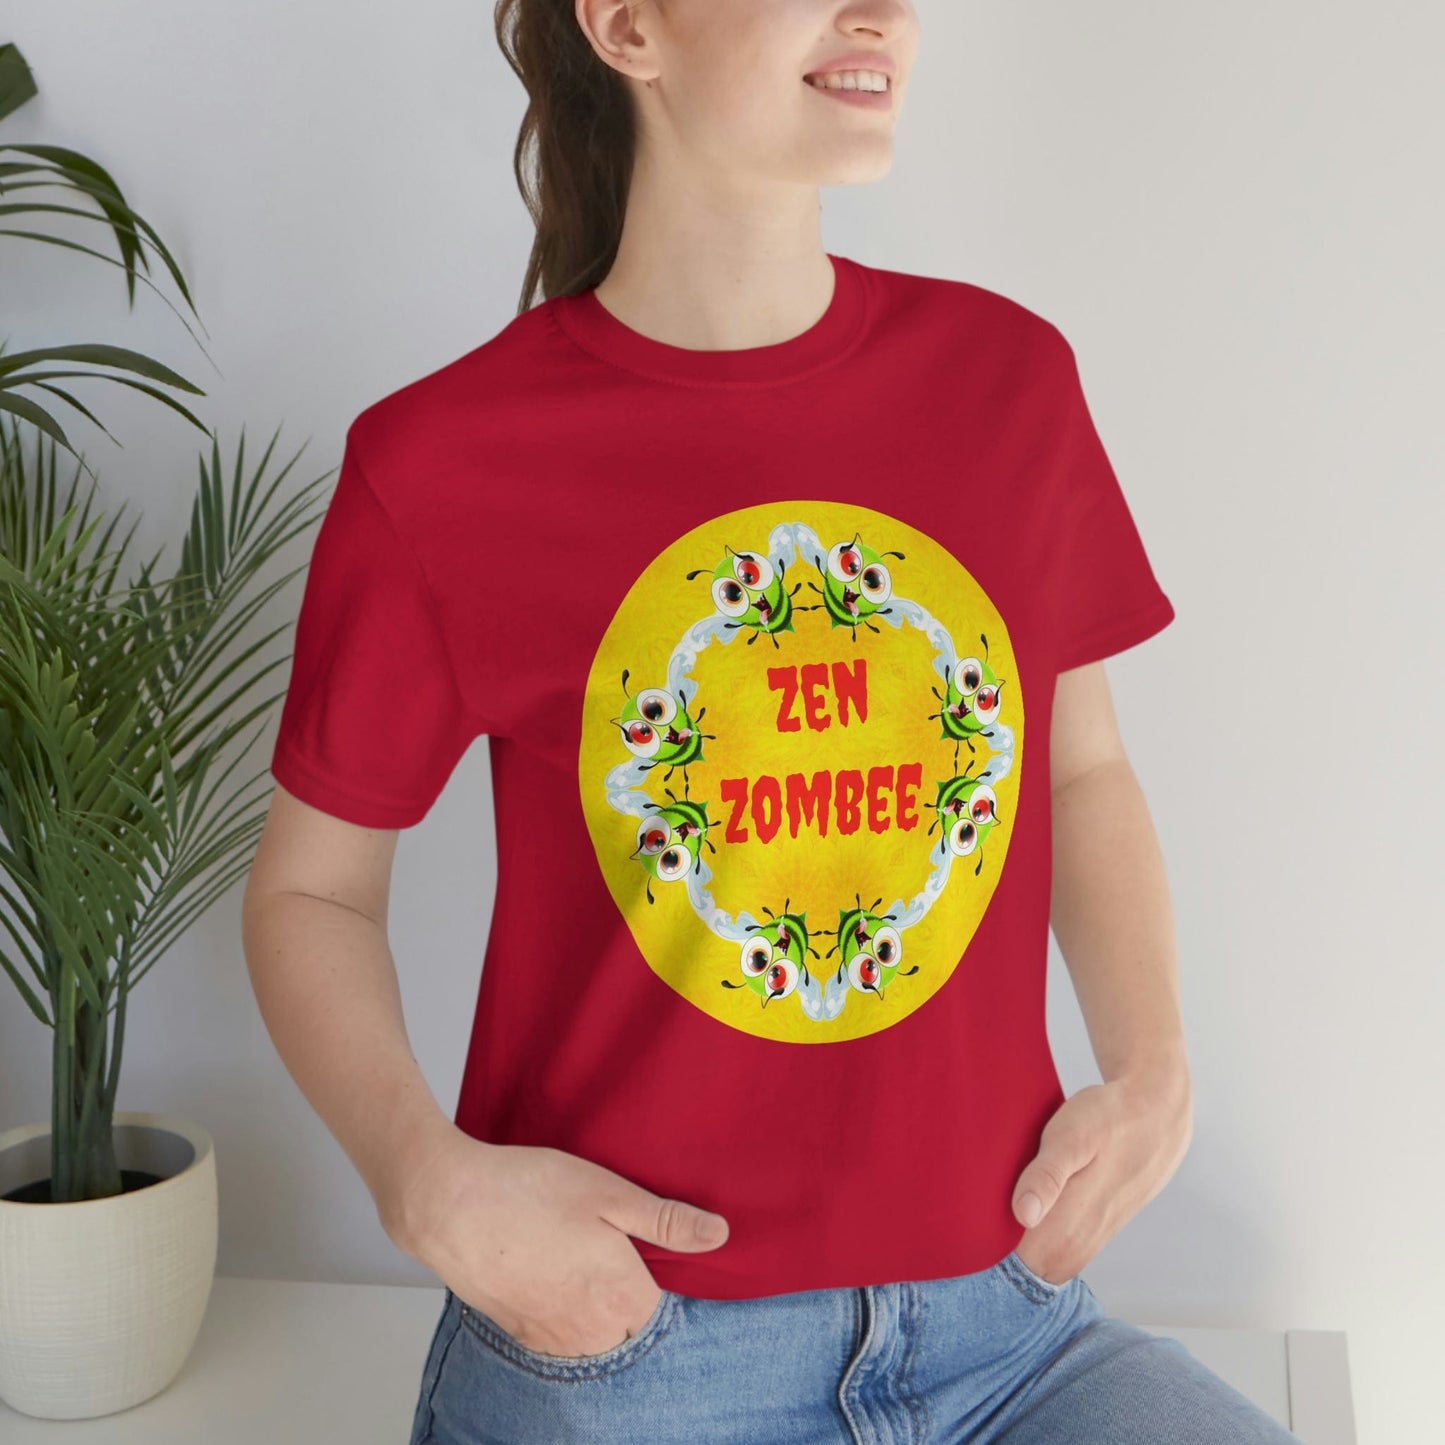 Weird Ironic Bee Shirt, Funny Zombie Shirt, Best Selling Kawaii Shirt, Witty Fun Shirt Designs, Soft Bella Canvas Cool Graphic Tee, Unique